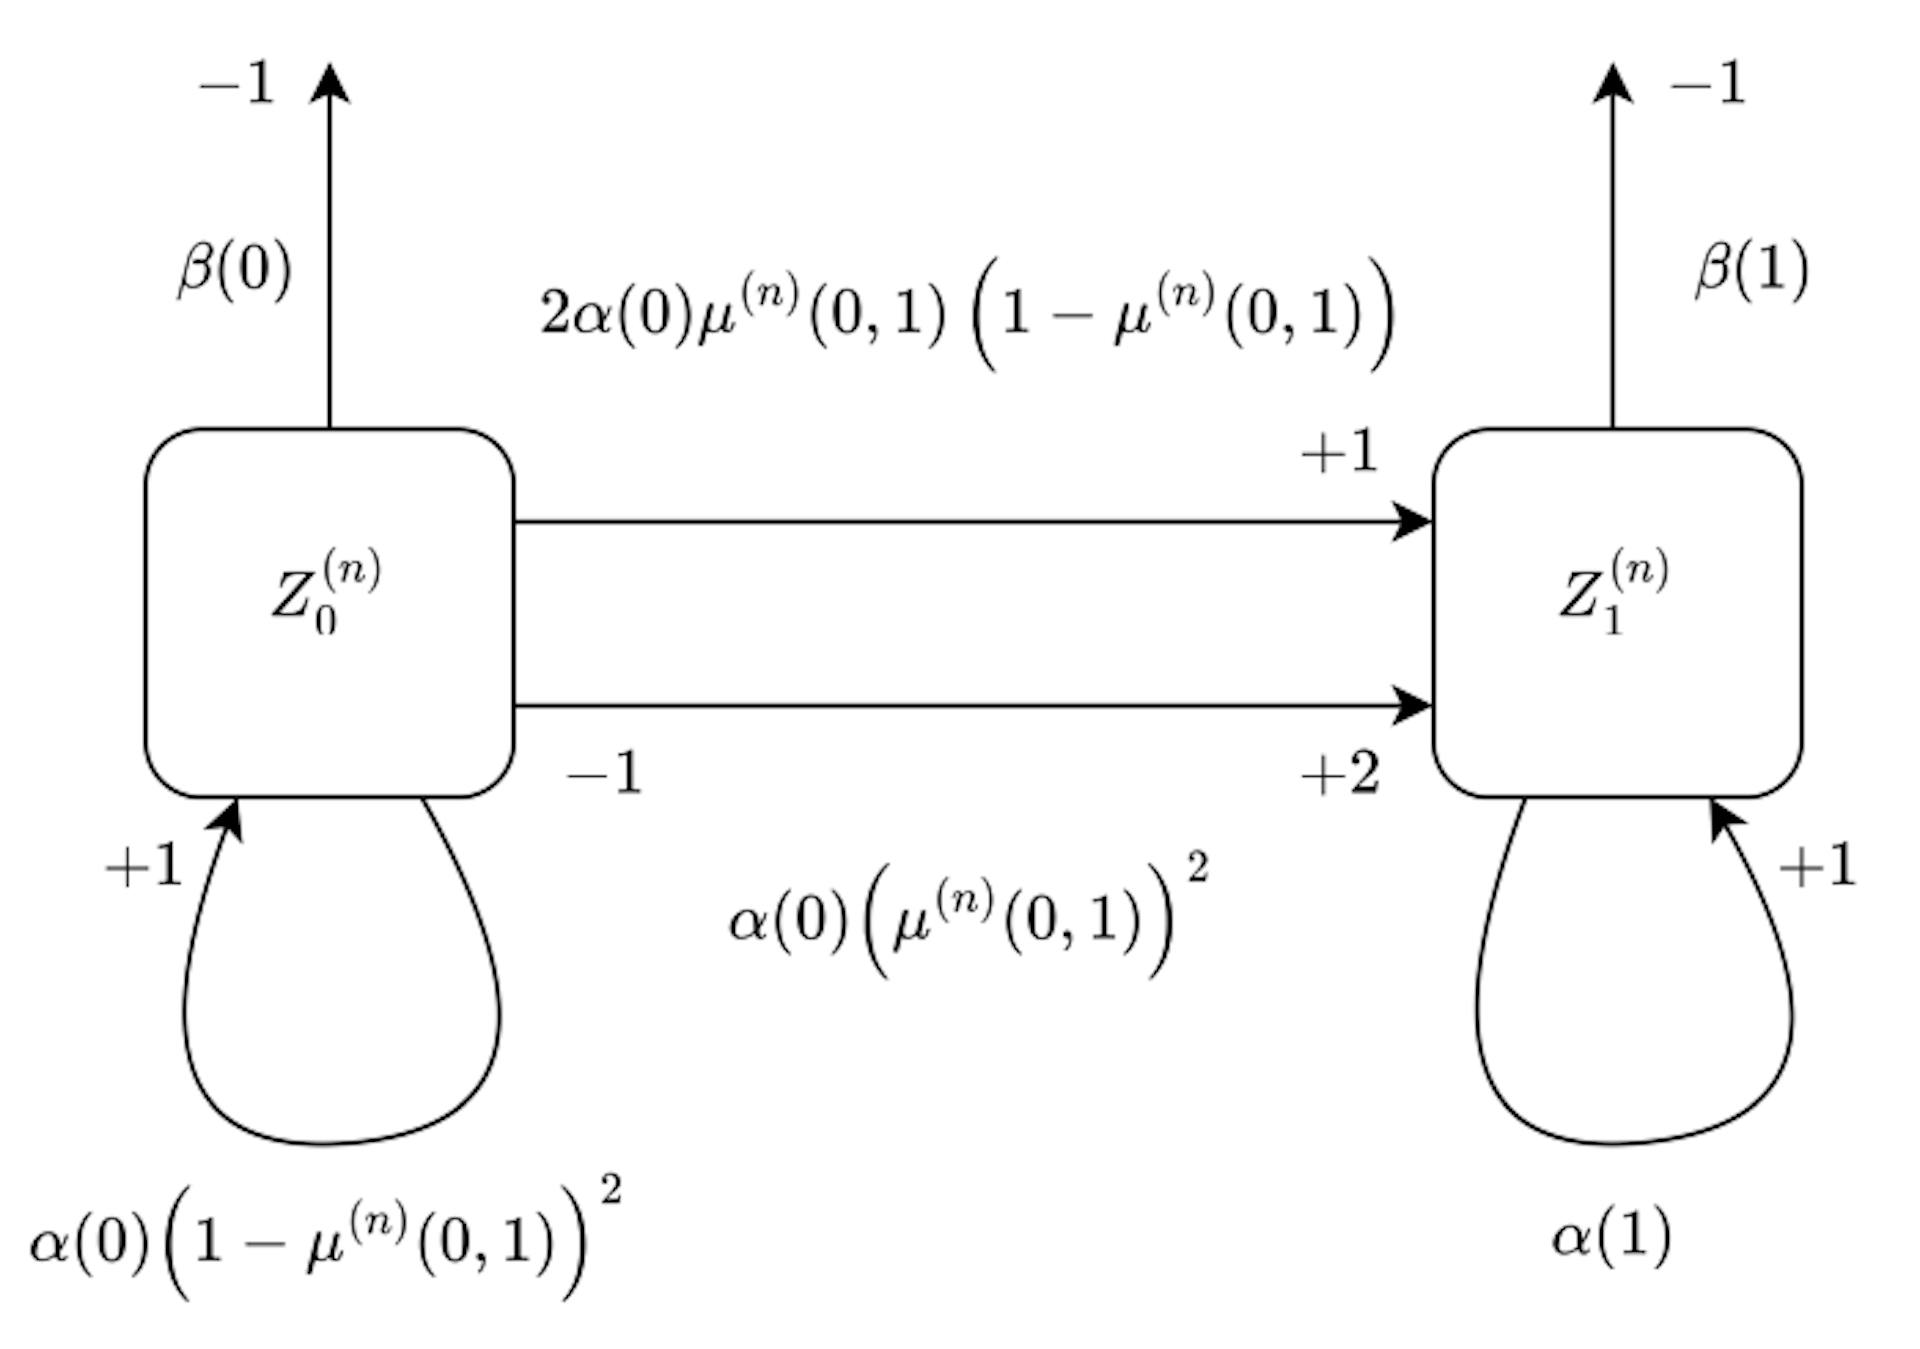 Figure 1: Two traits model without backward mutation